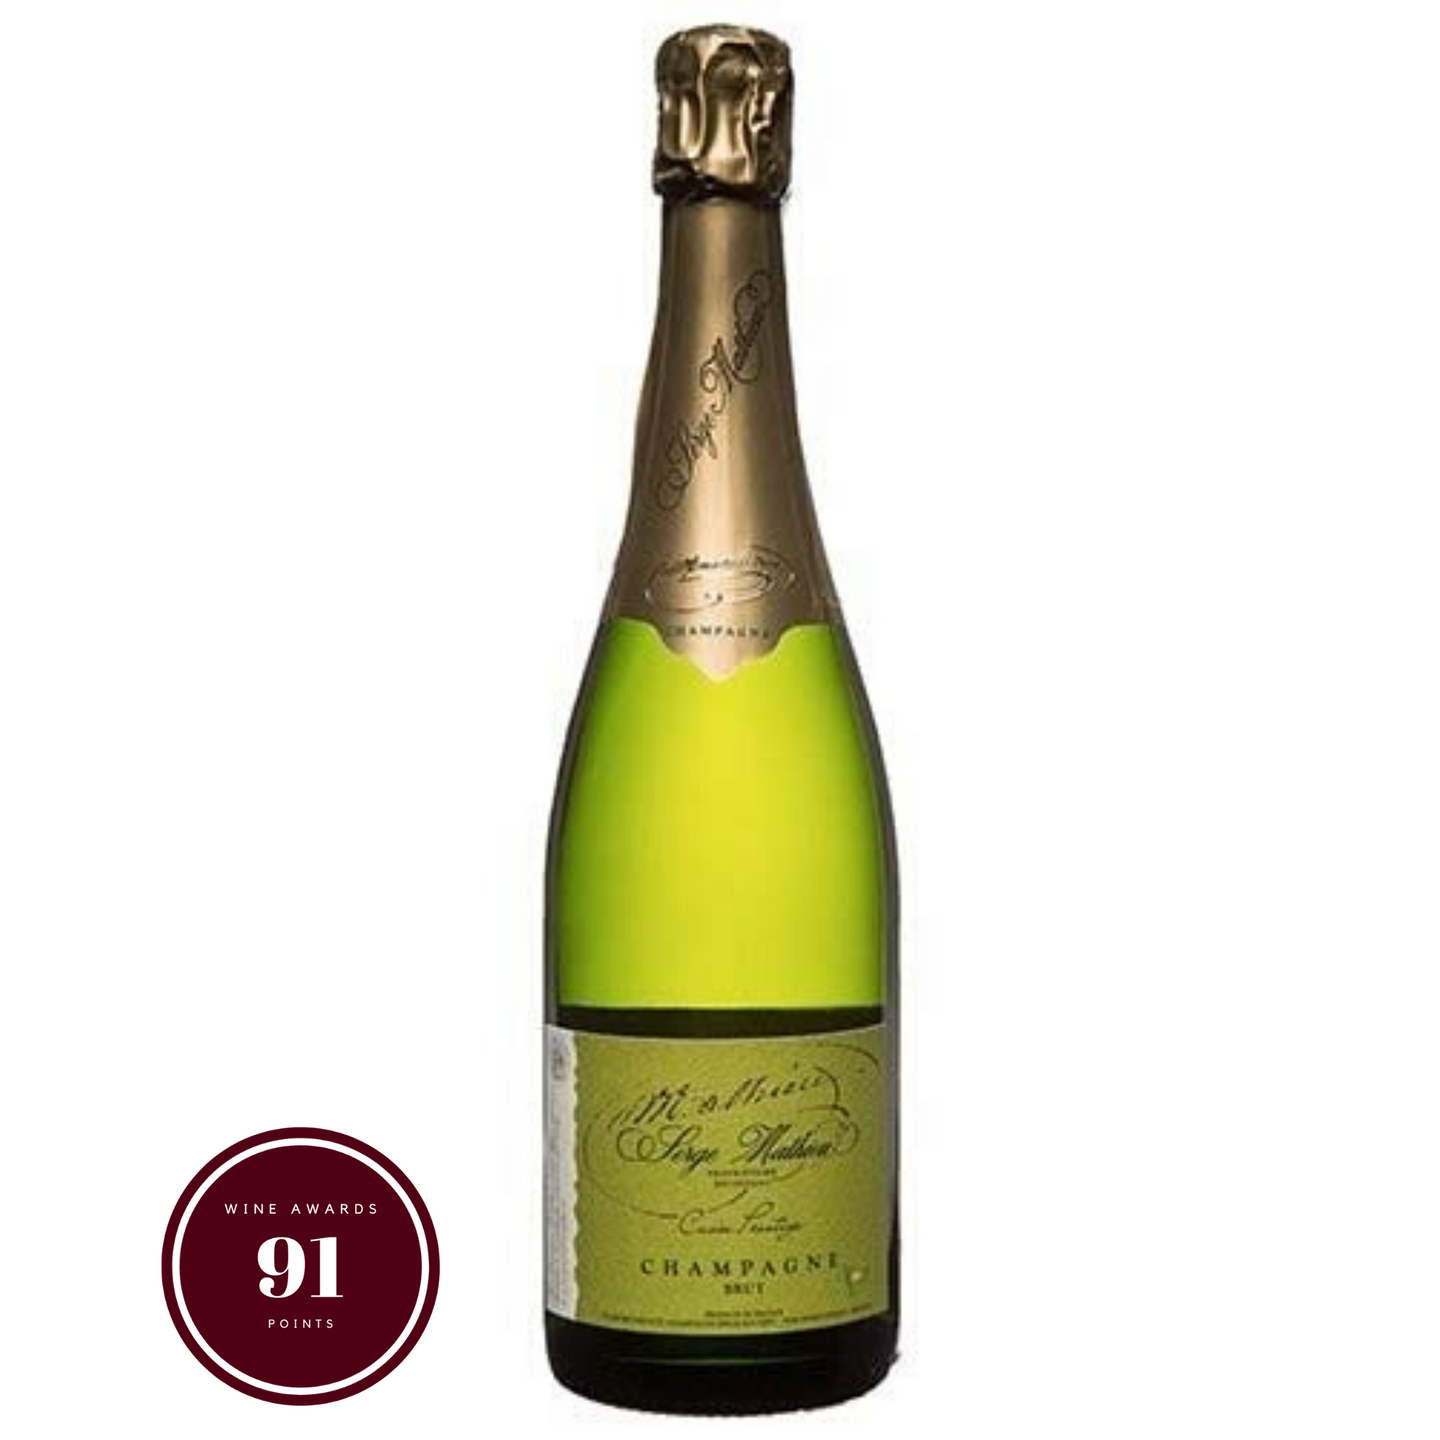 Serge Mathieu Brut Prestige Champagne France